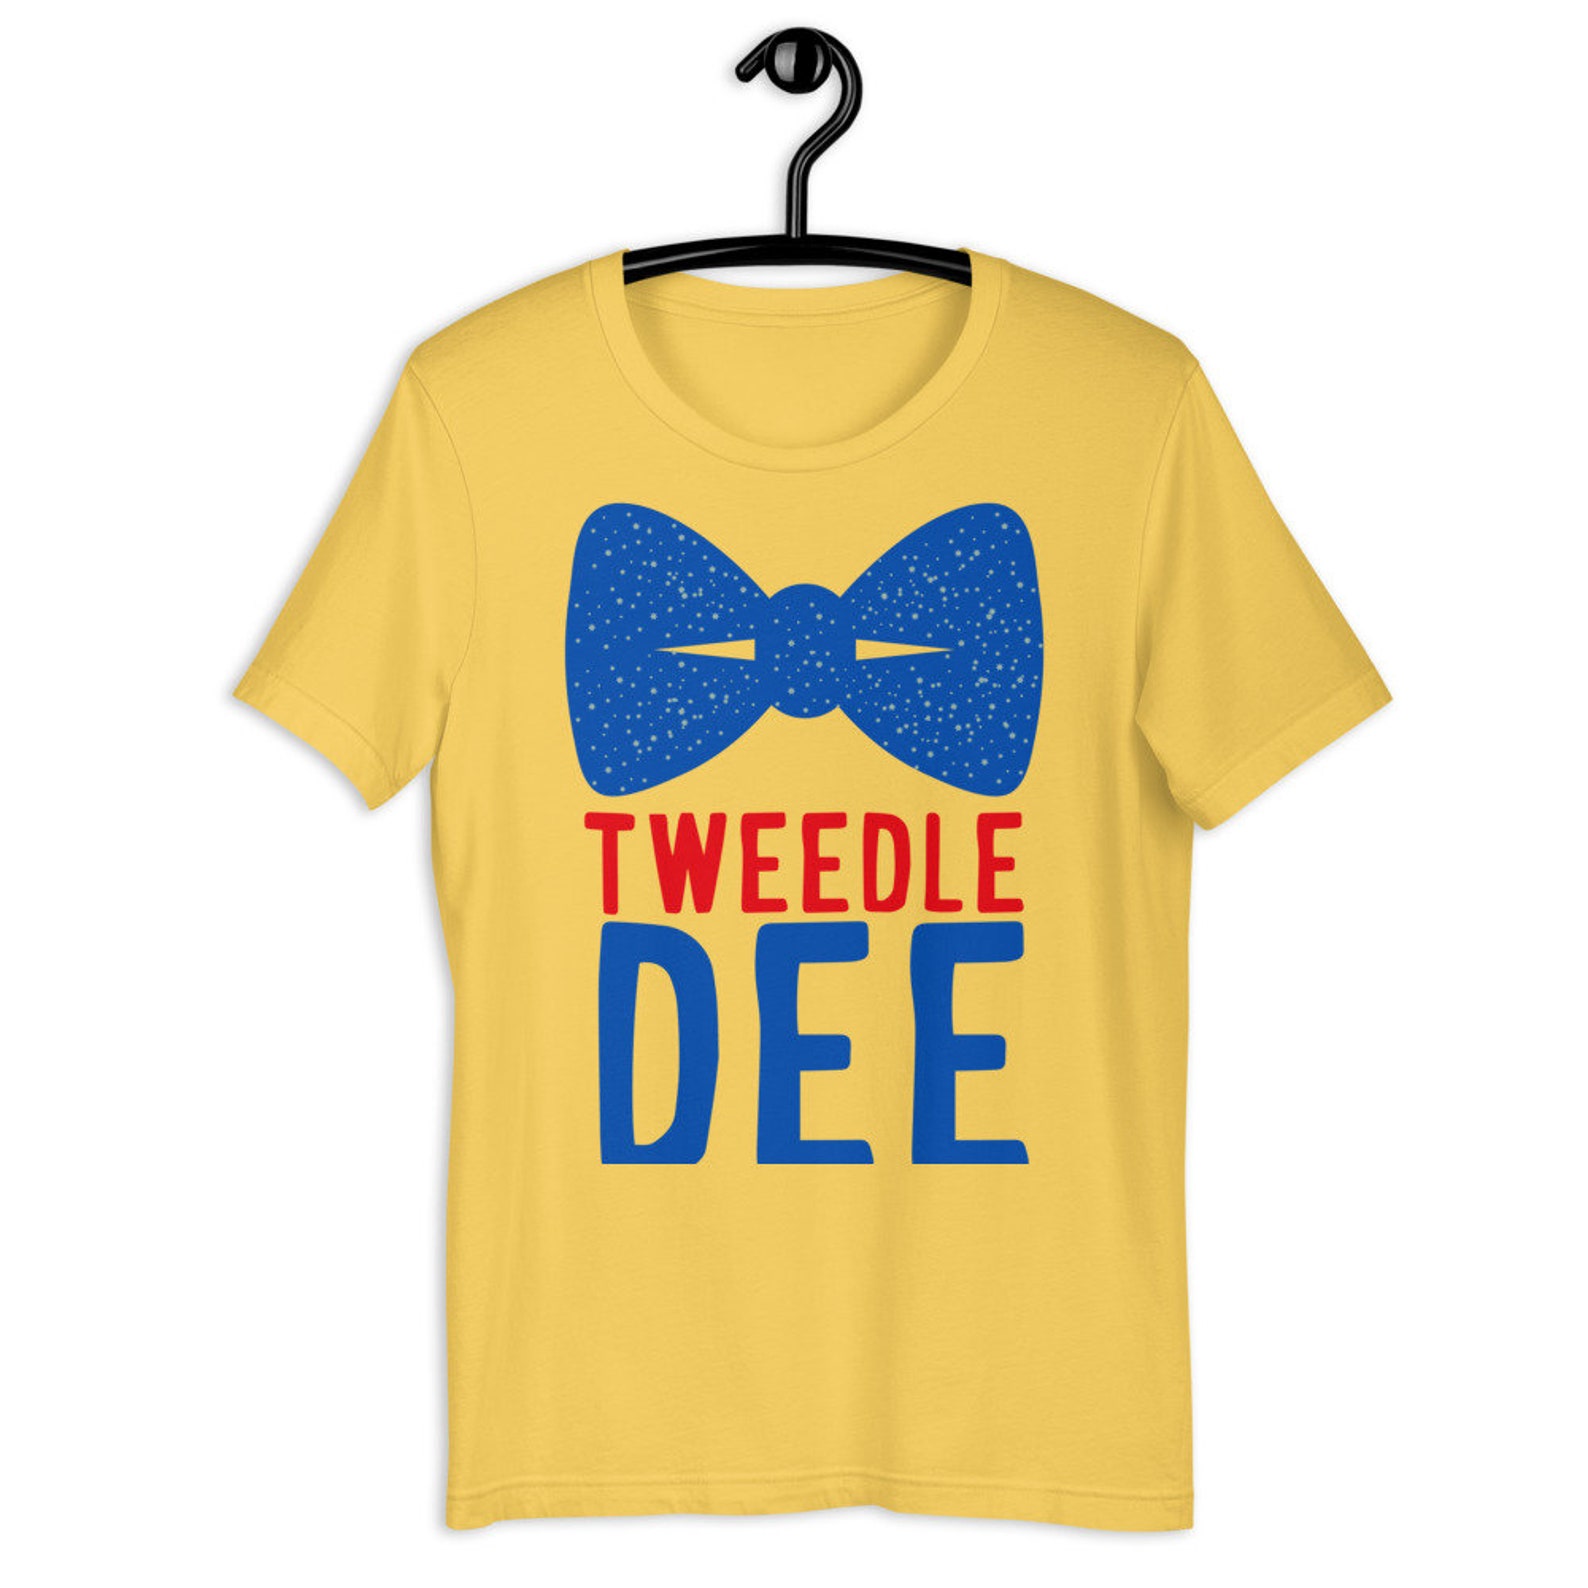 Tweedle Dee Tshirt Alice In Wonderland Matching Halloween | Etsy